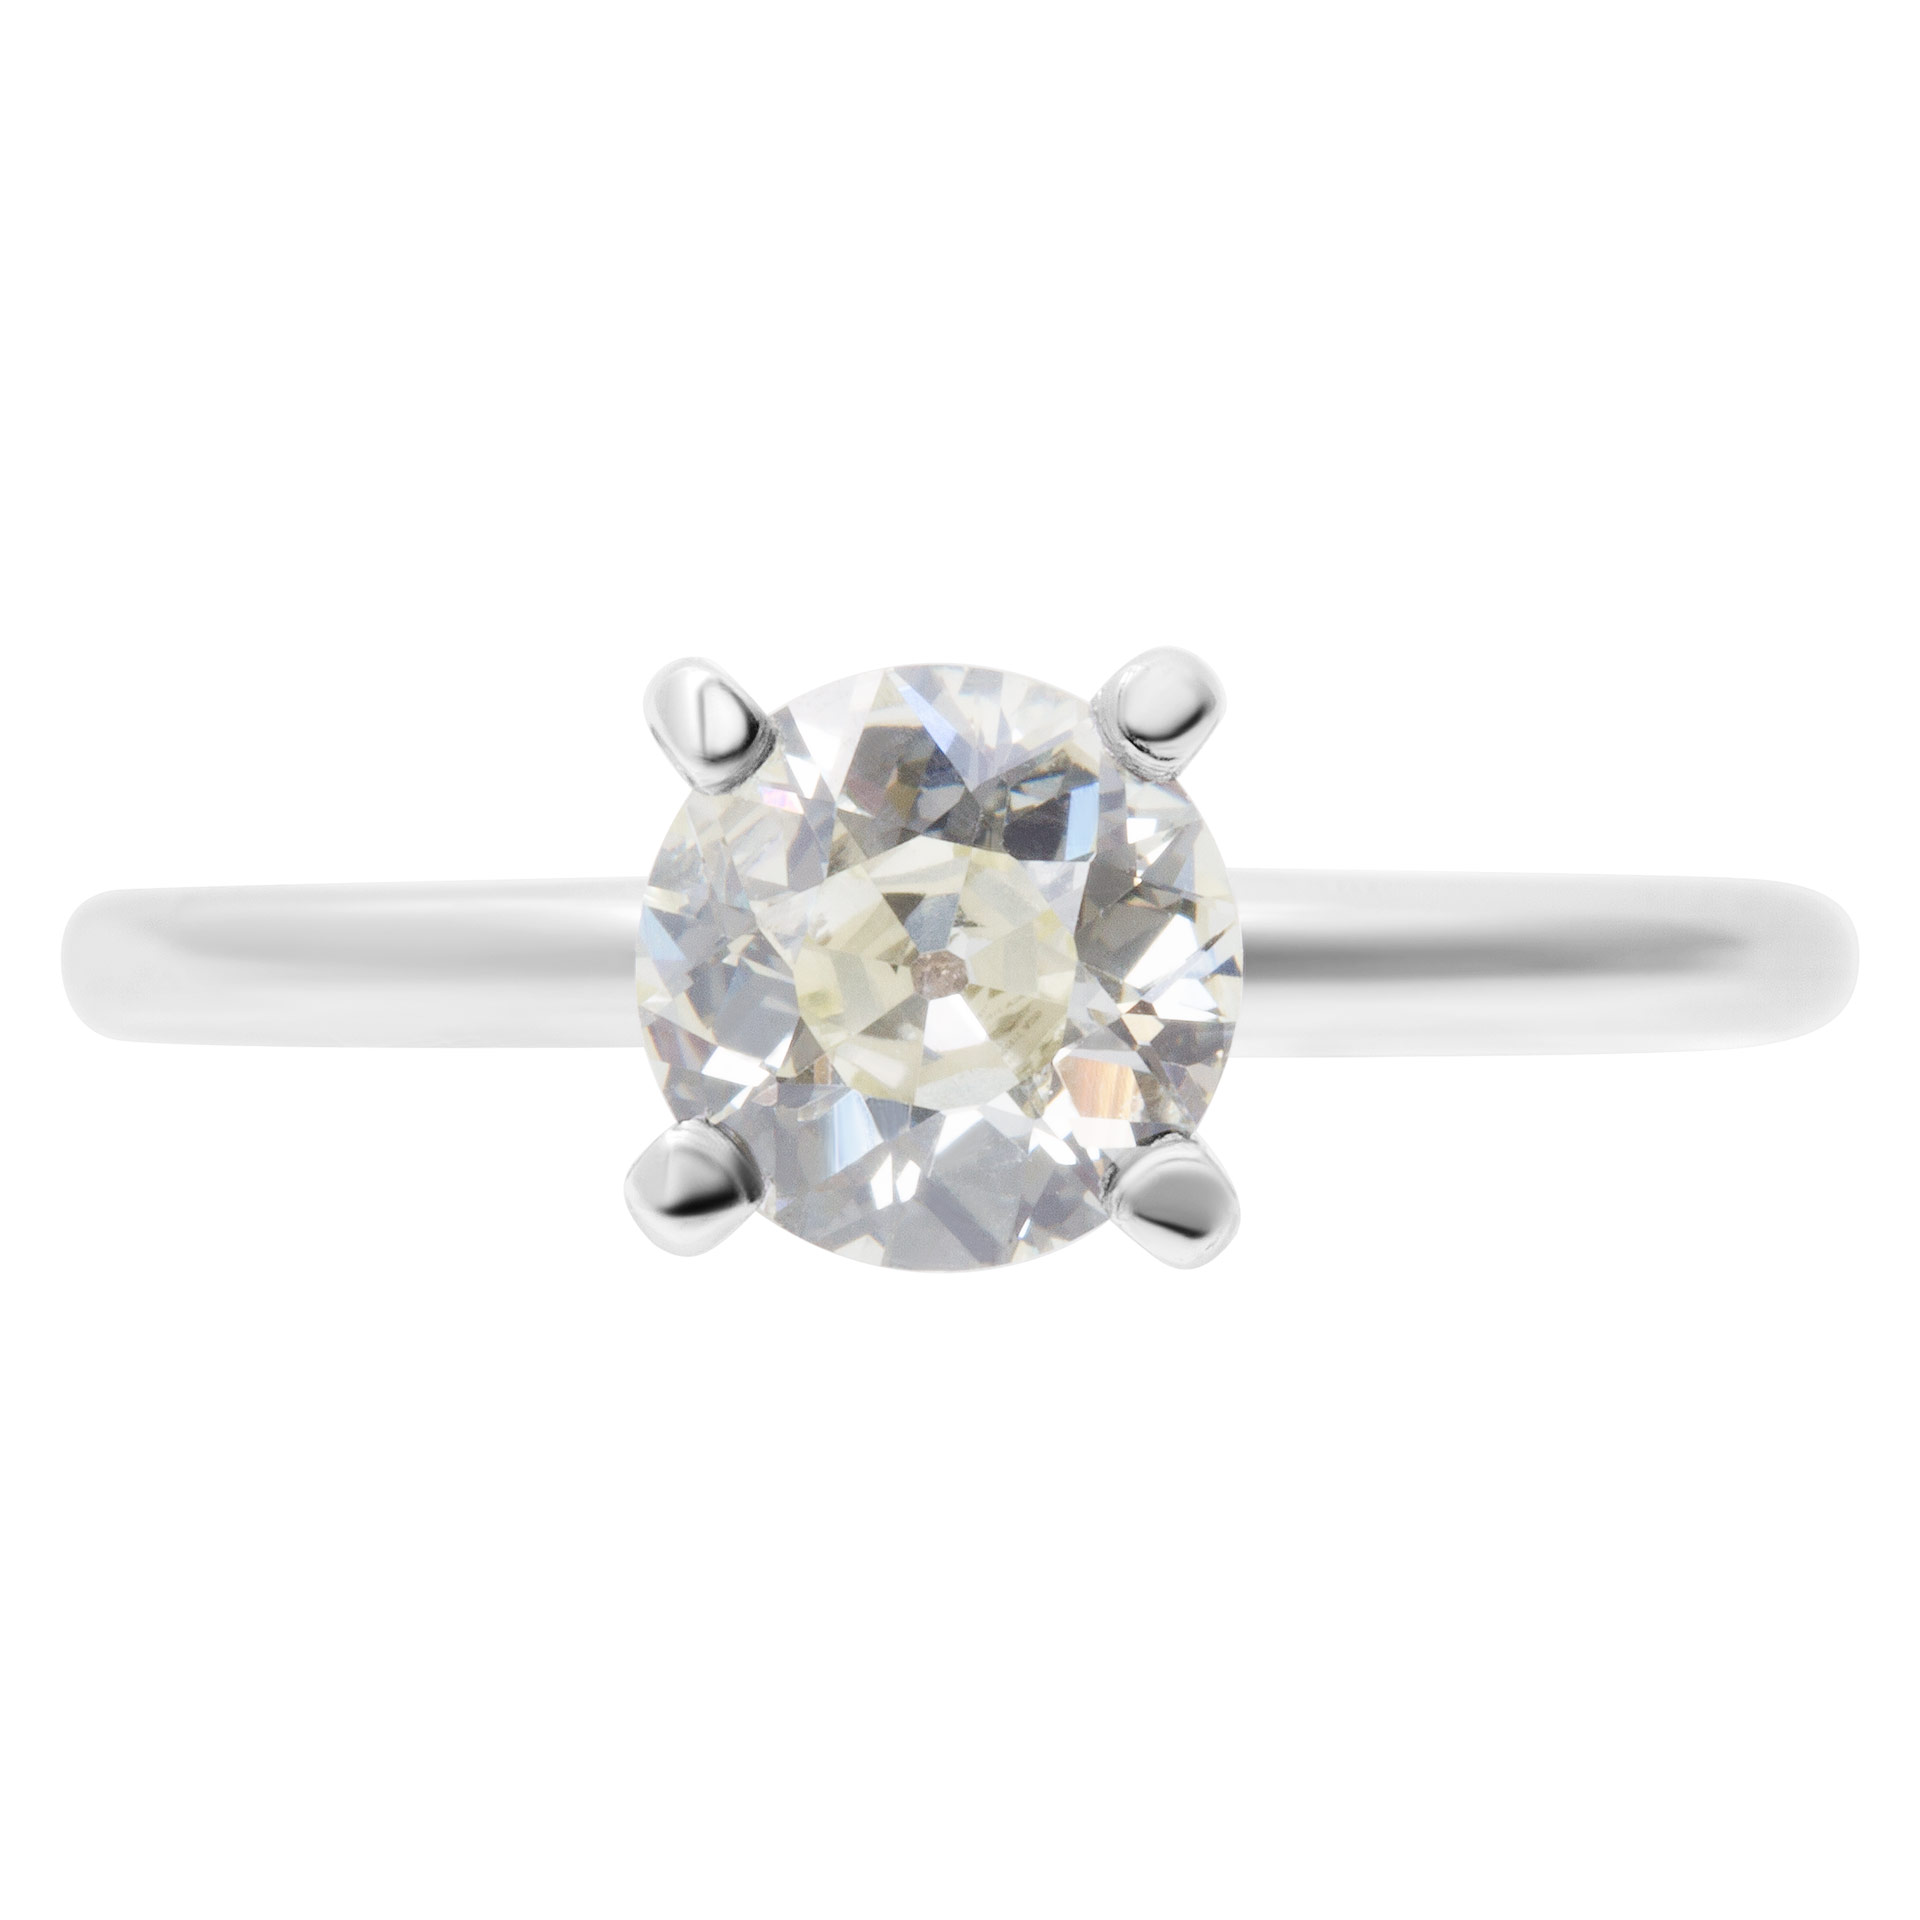 GIA certified old europeam brilliant cut diamond 1.09 carat (O to P range, VS1 clarity) solitaire ring set in platinum image 3